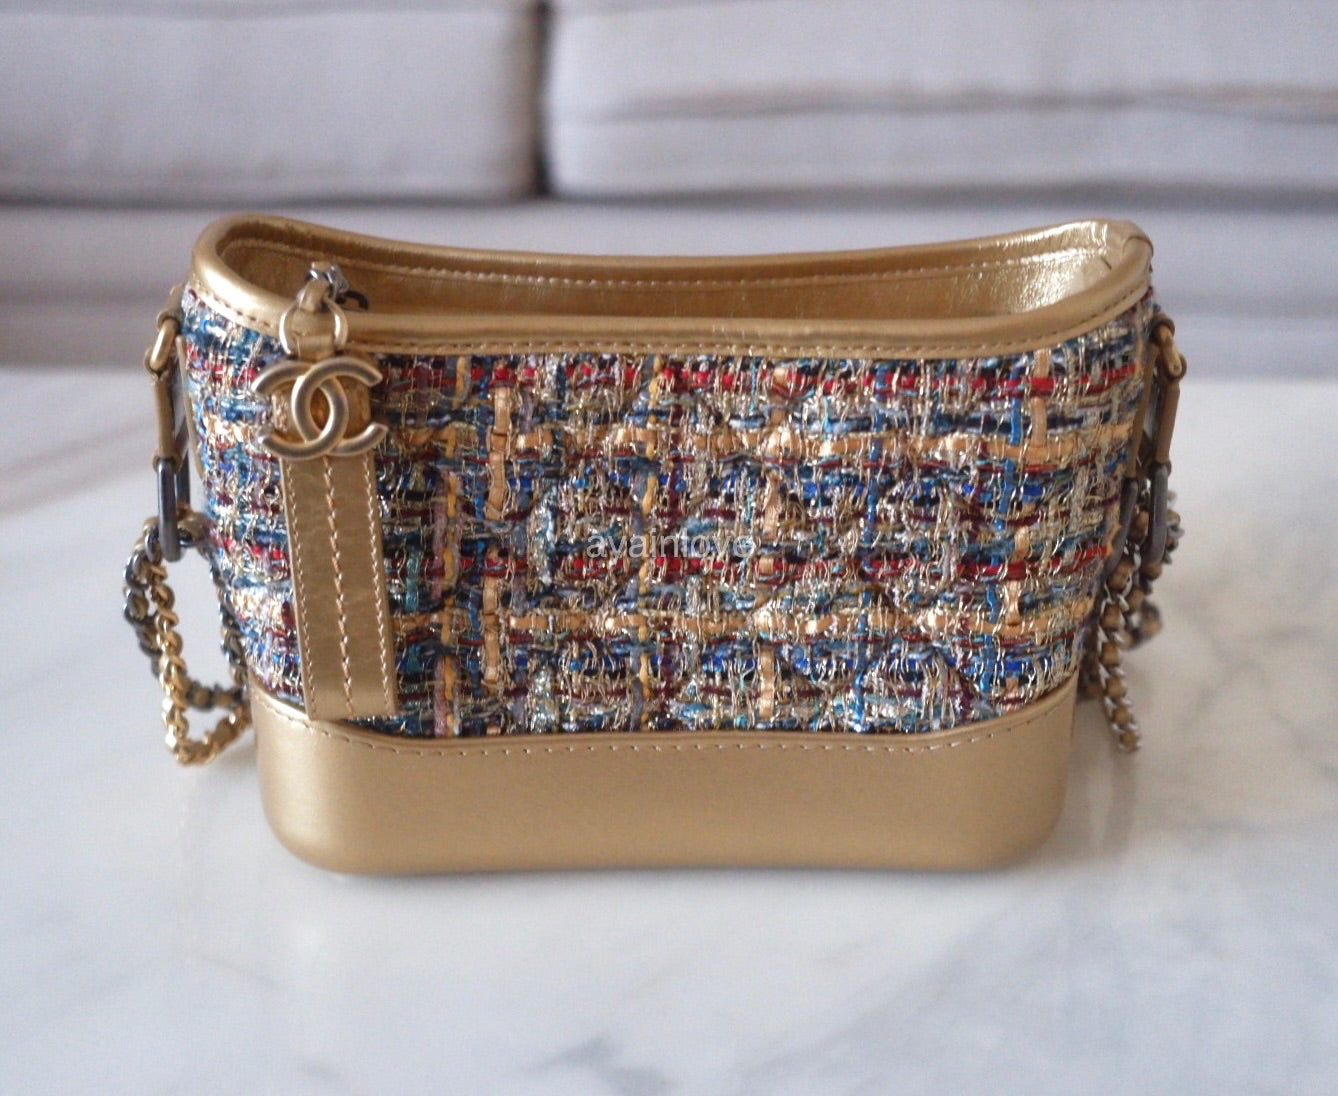 Chanel Pre-owned Mini Gabrielle Shoulder Bag